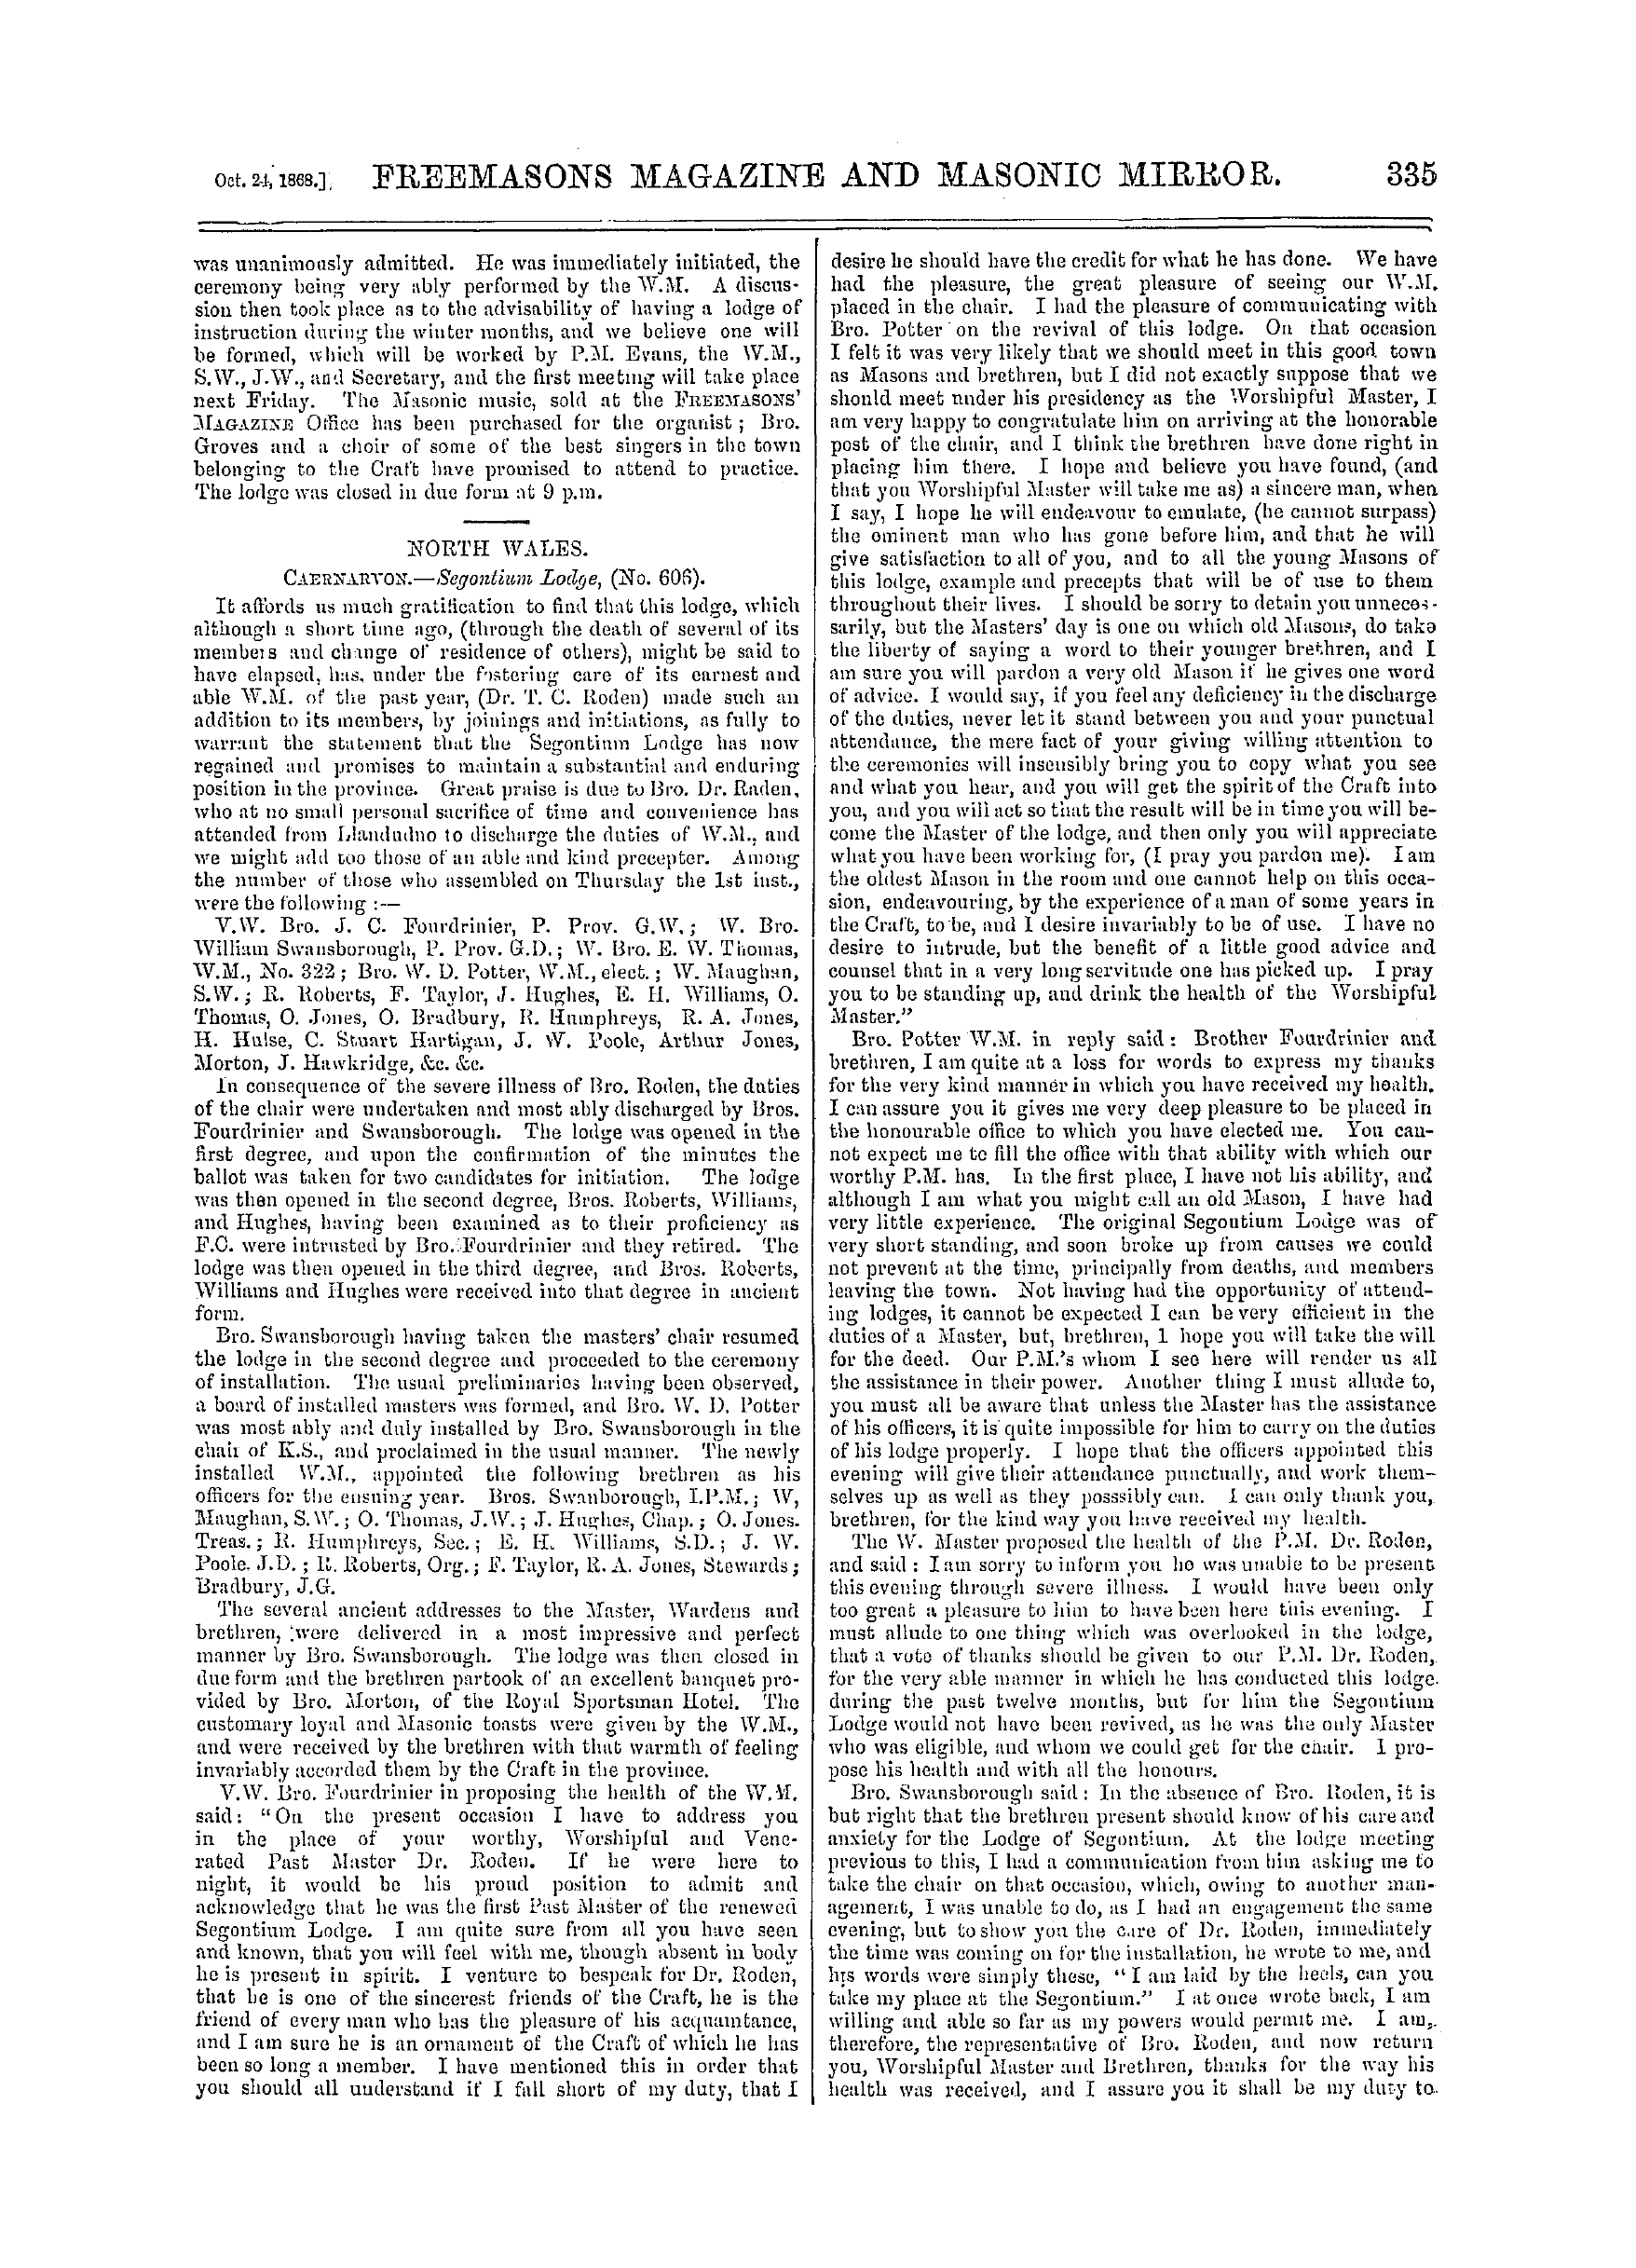 The Freemasons' Monthly Magazine: 1868-10-24 - Provincial.